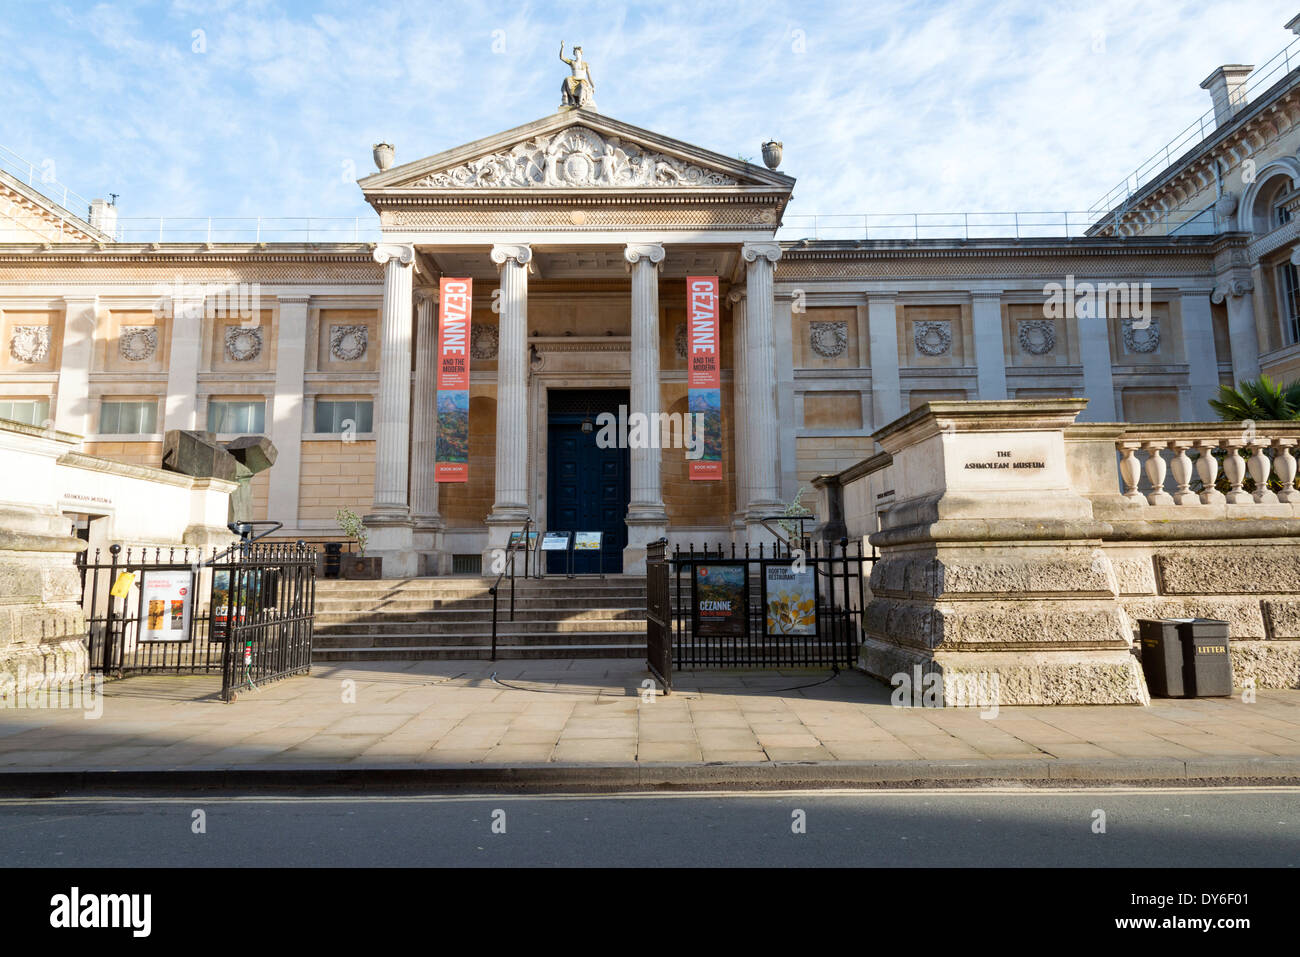 Ashmolean museum in Oxford, UK. Stock Photo